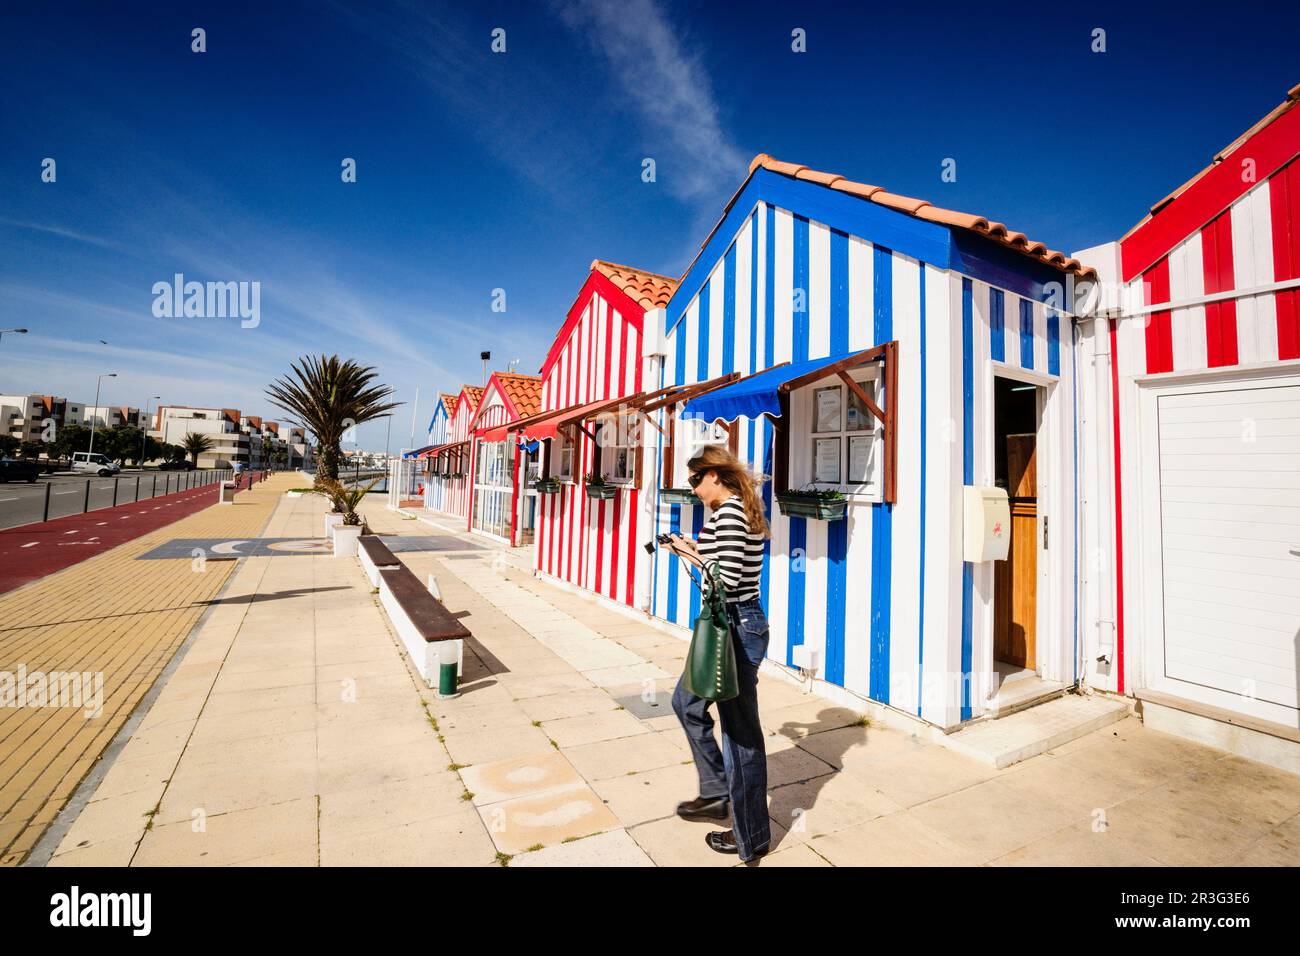 casas de colores,Costa Nova, Beira Litoral, Portugal, europa. Stock Photo